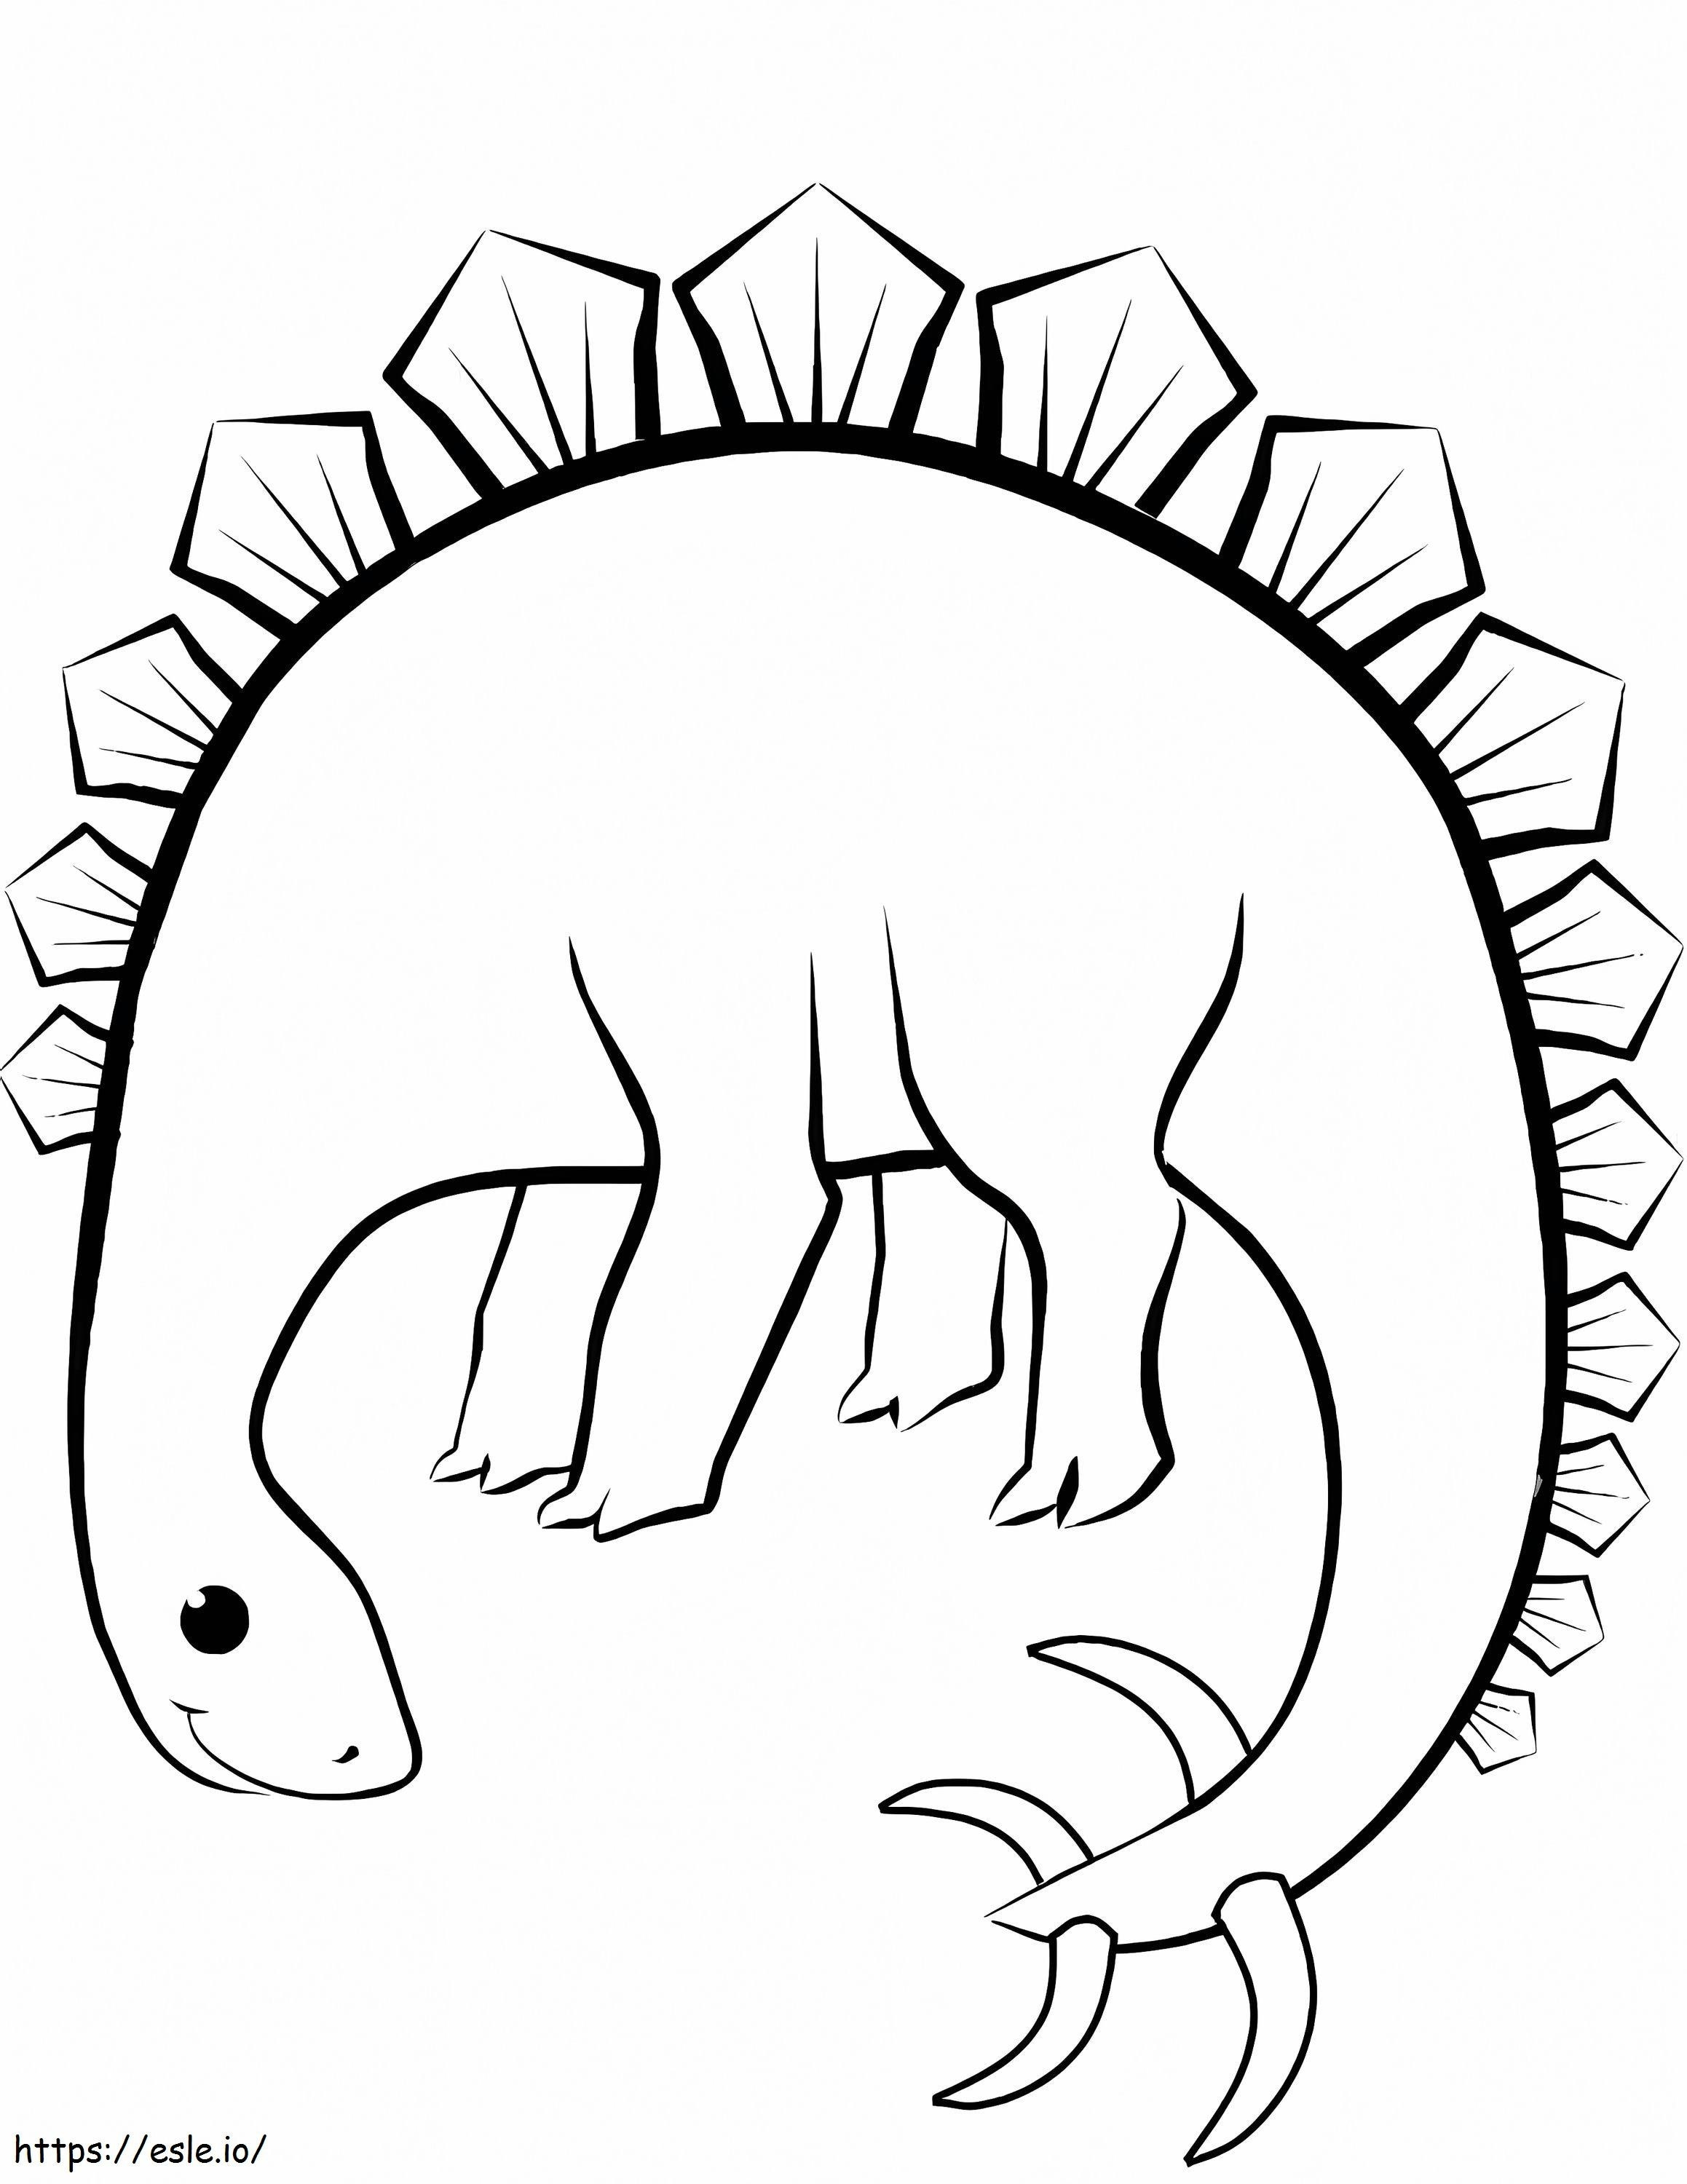 Stegosaurus Dino coloring page